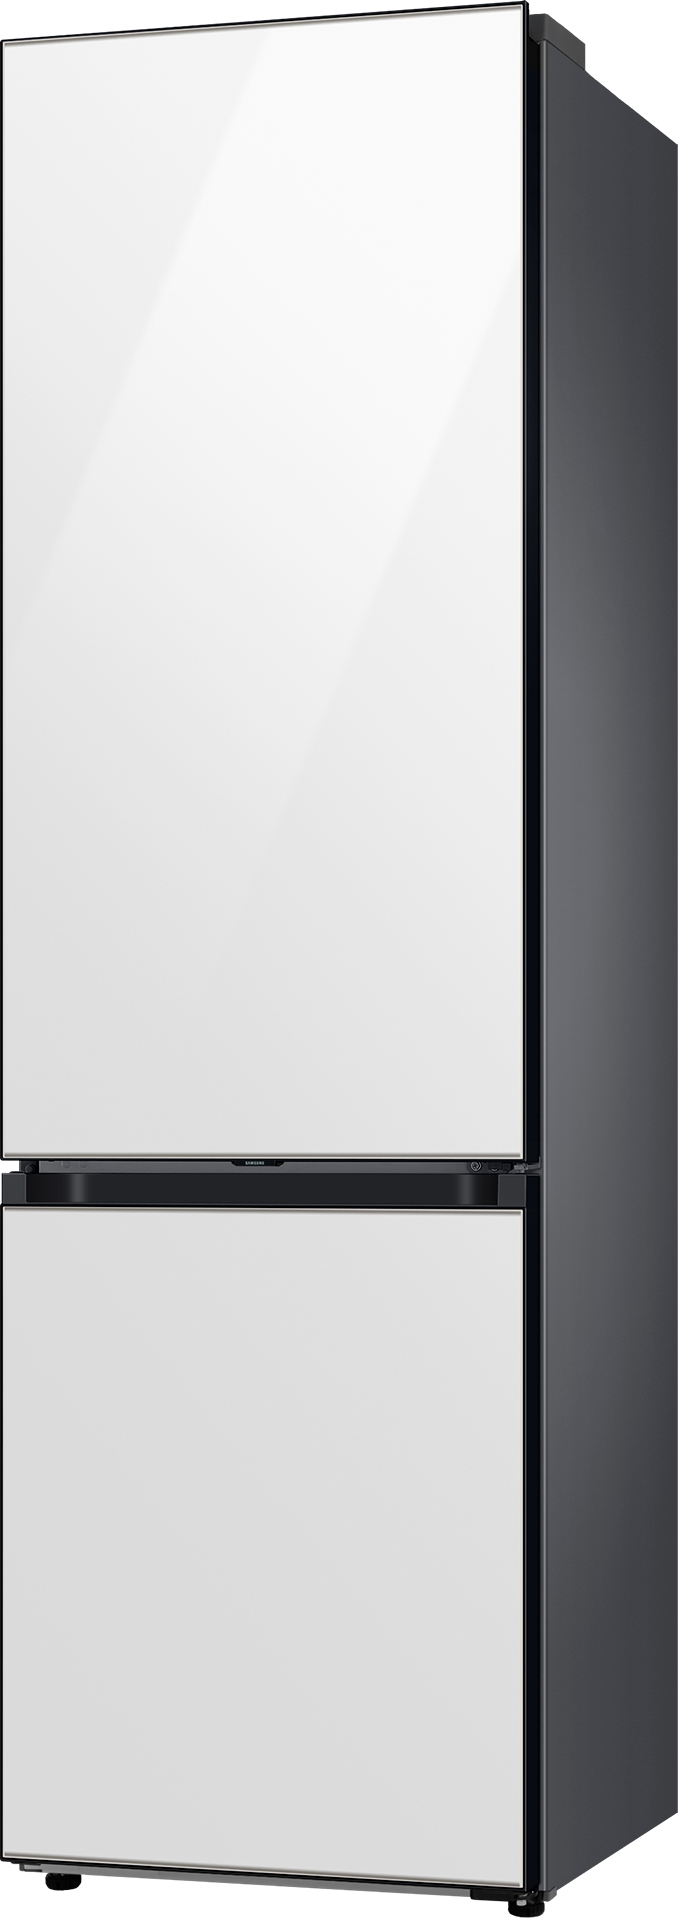 Холодильник Samsung RB38A6B6212/UA обзор - фото 11